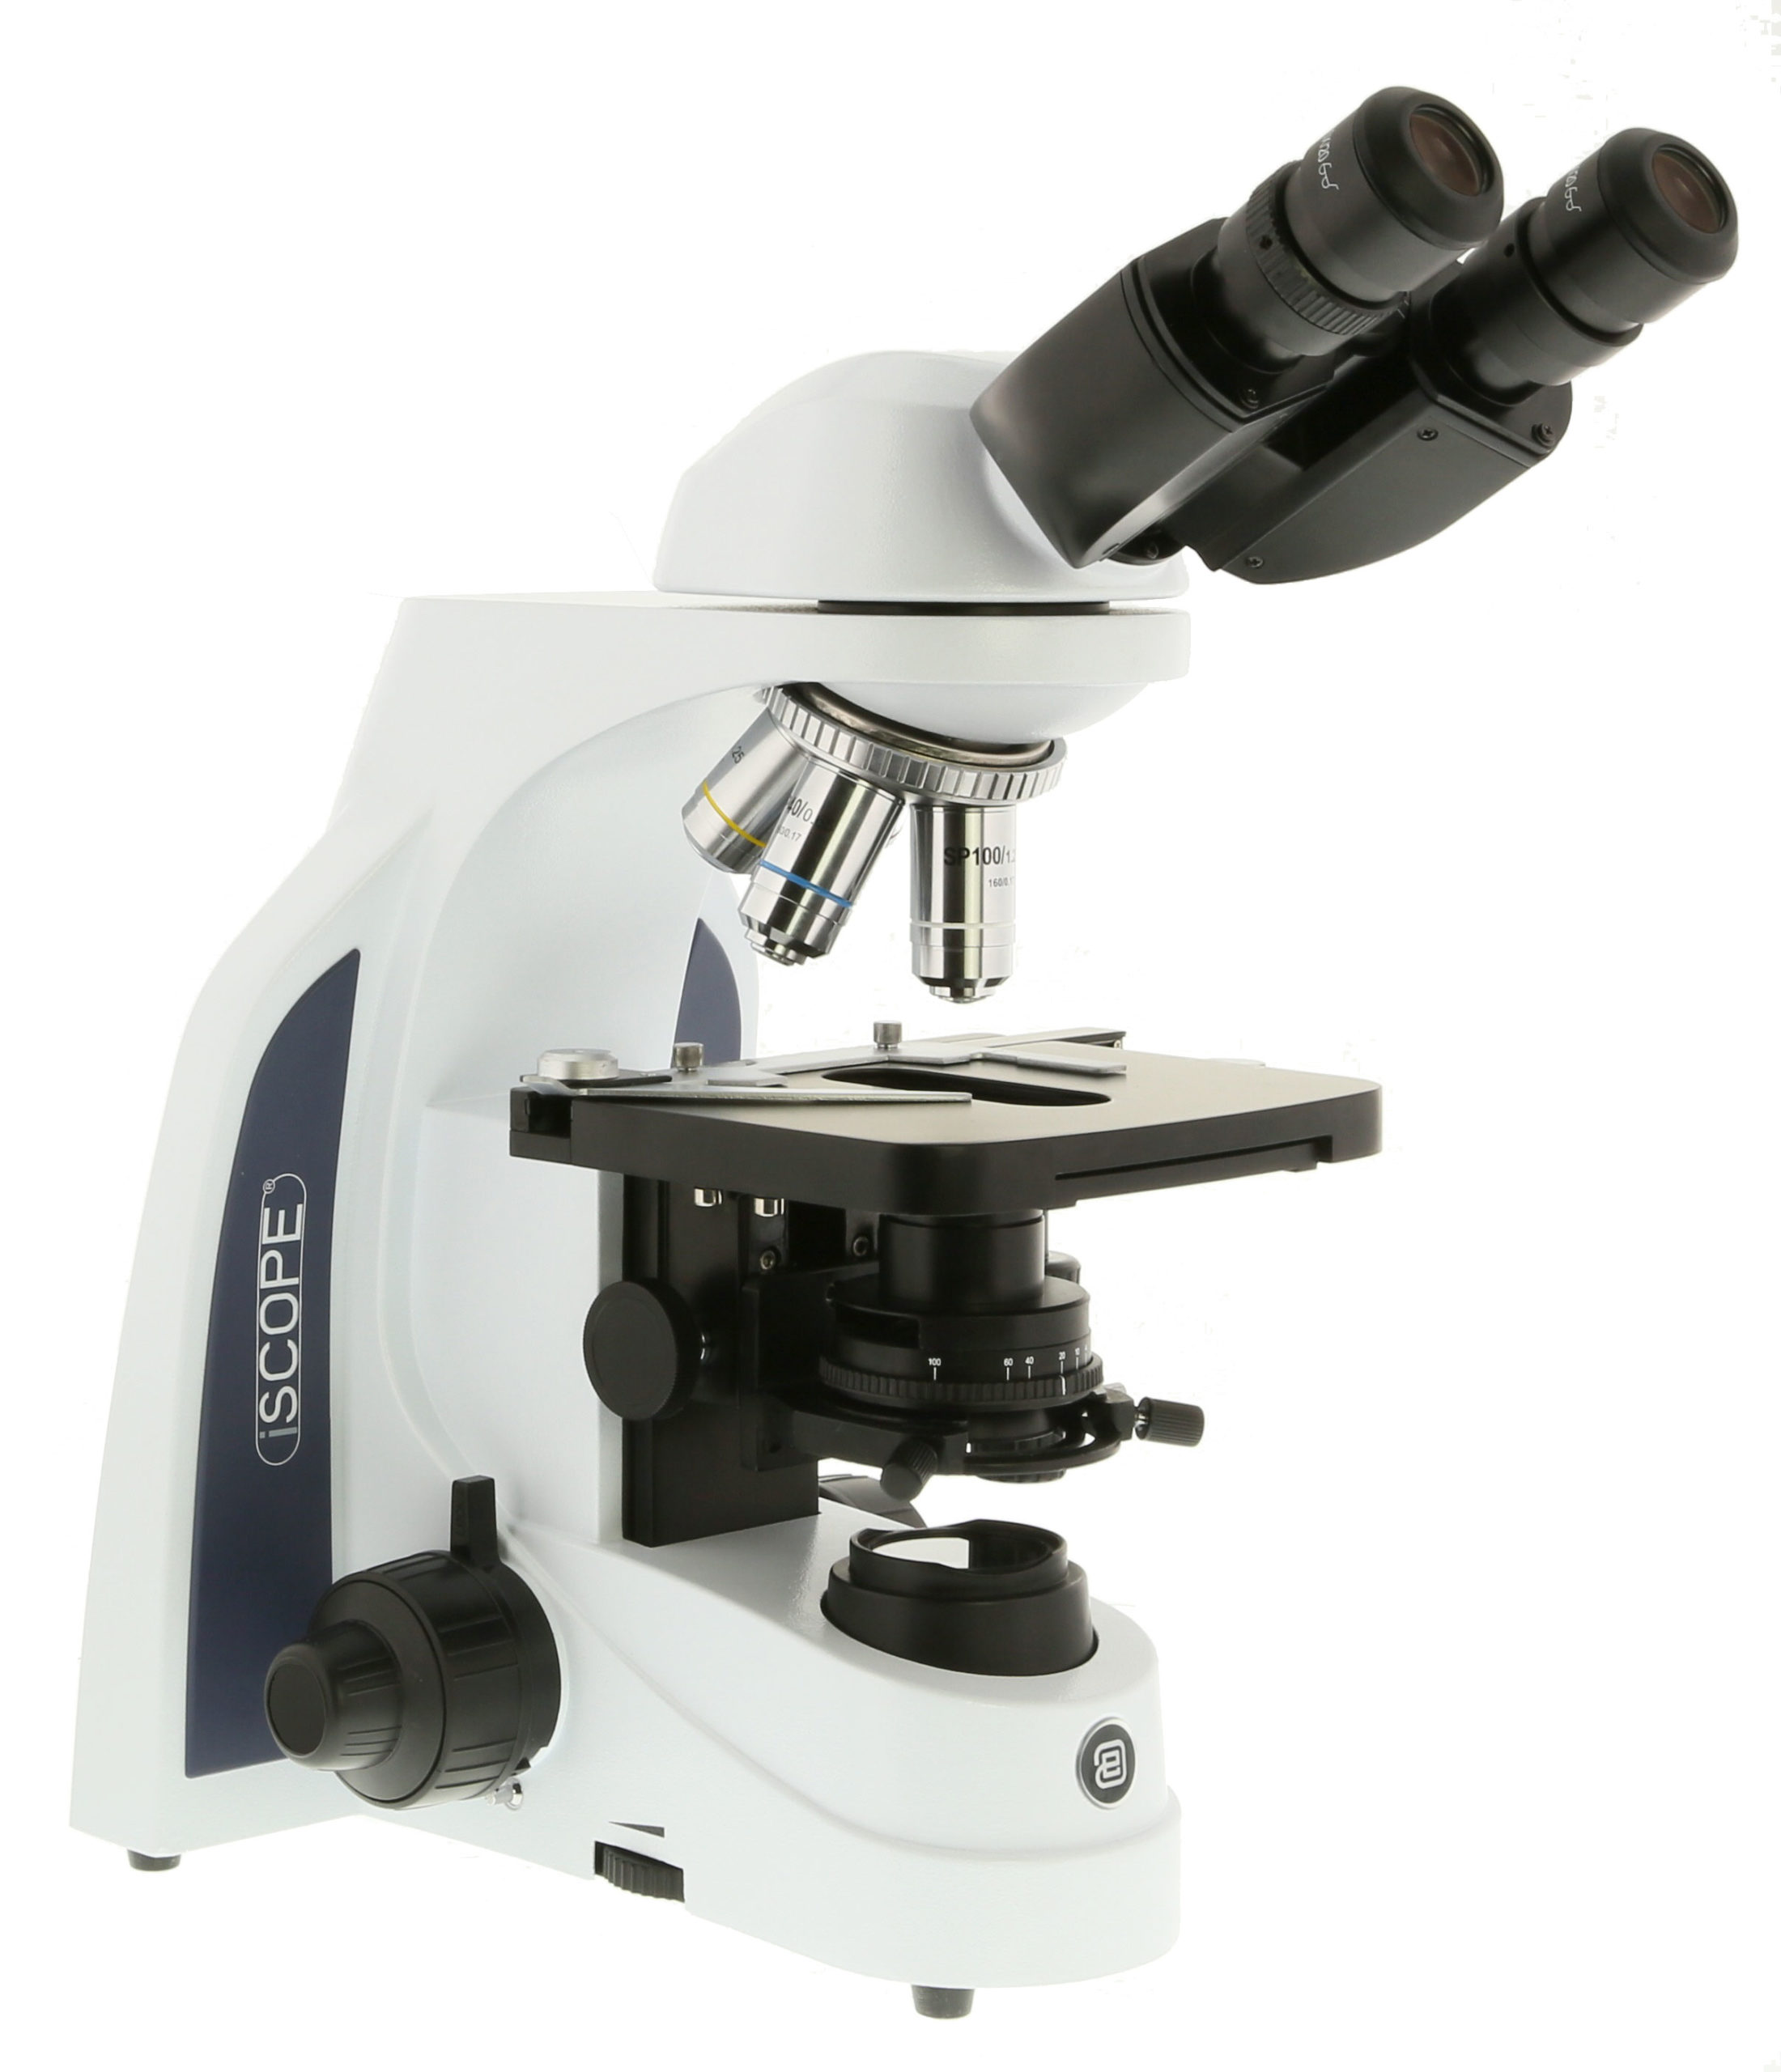 Microscope for Biochemistry Students